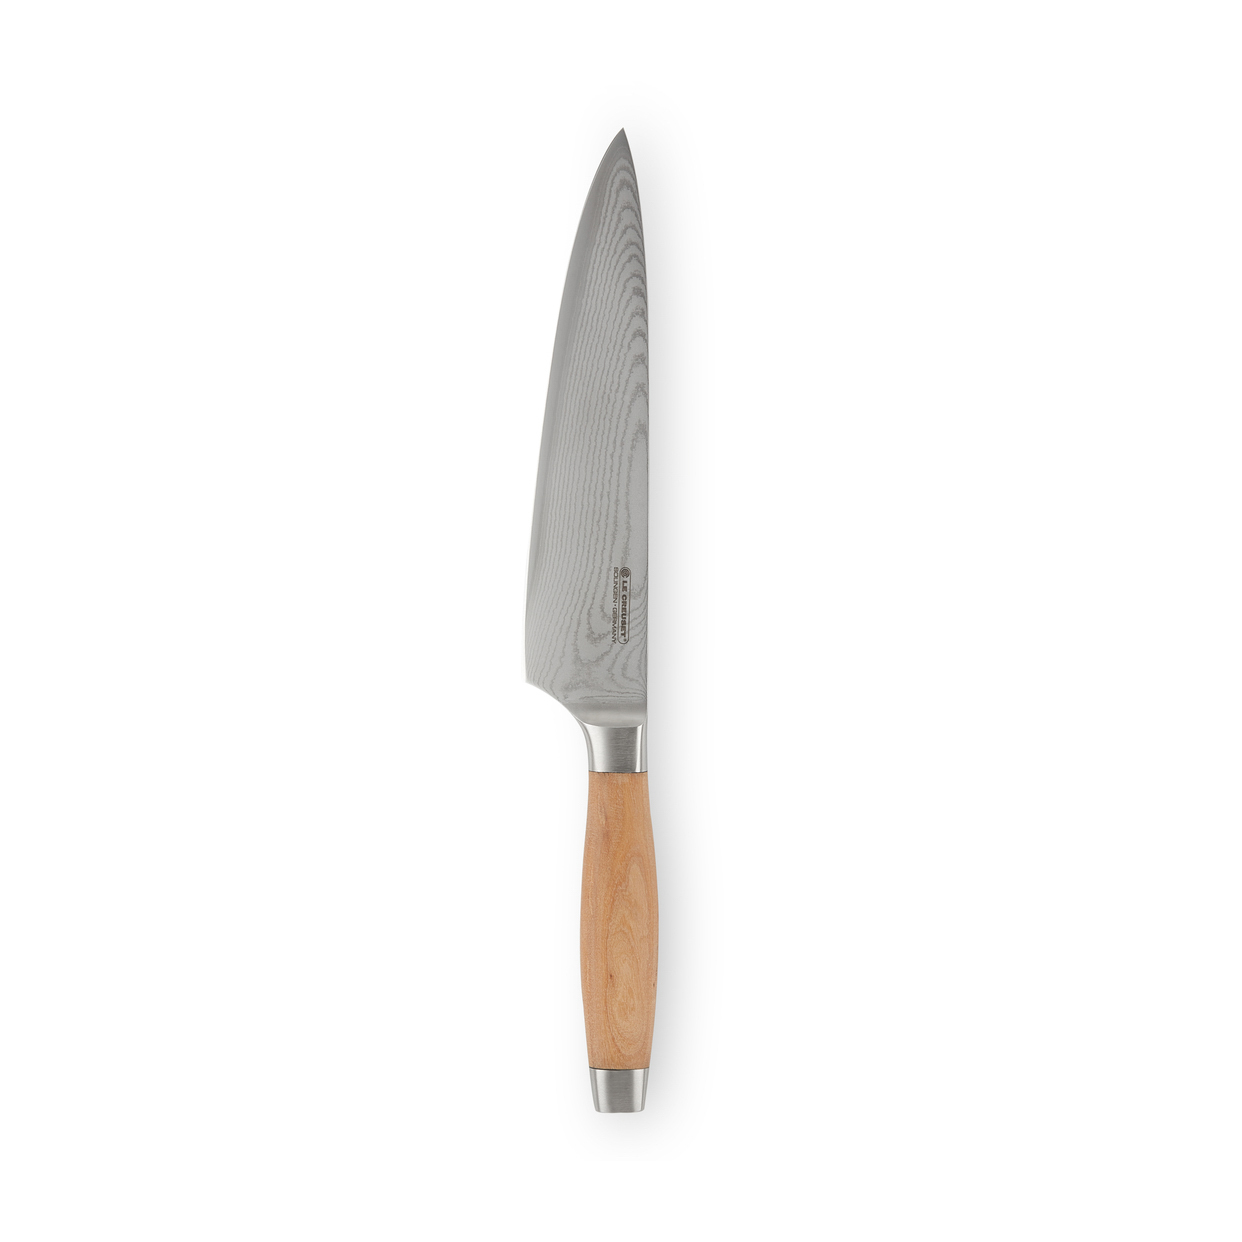 https://www.nordicnest.com/assets/blobs/le-creuset-le-creuset-knife-with-olive-wood-handle-20-cm/514185-01_2_ProductImageExtra-efe3ed2ef6.jpeg